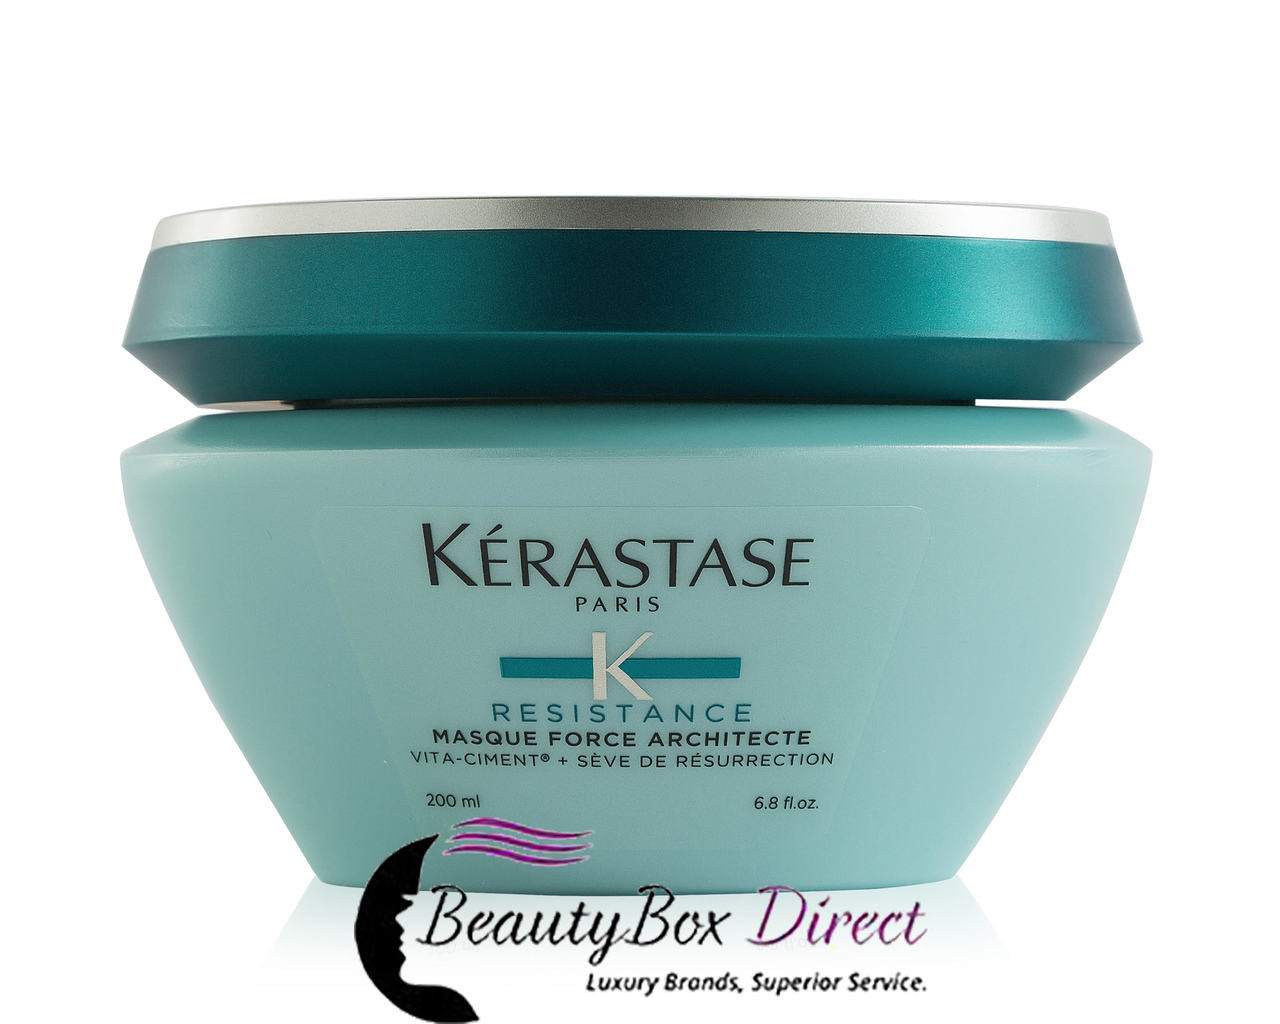 Kerastase Resistance Masque Force Architecte 6.8 oz - BeautyBox Direct